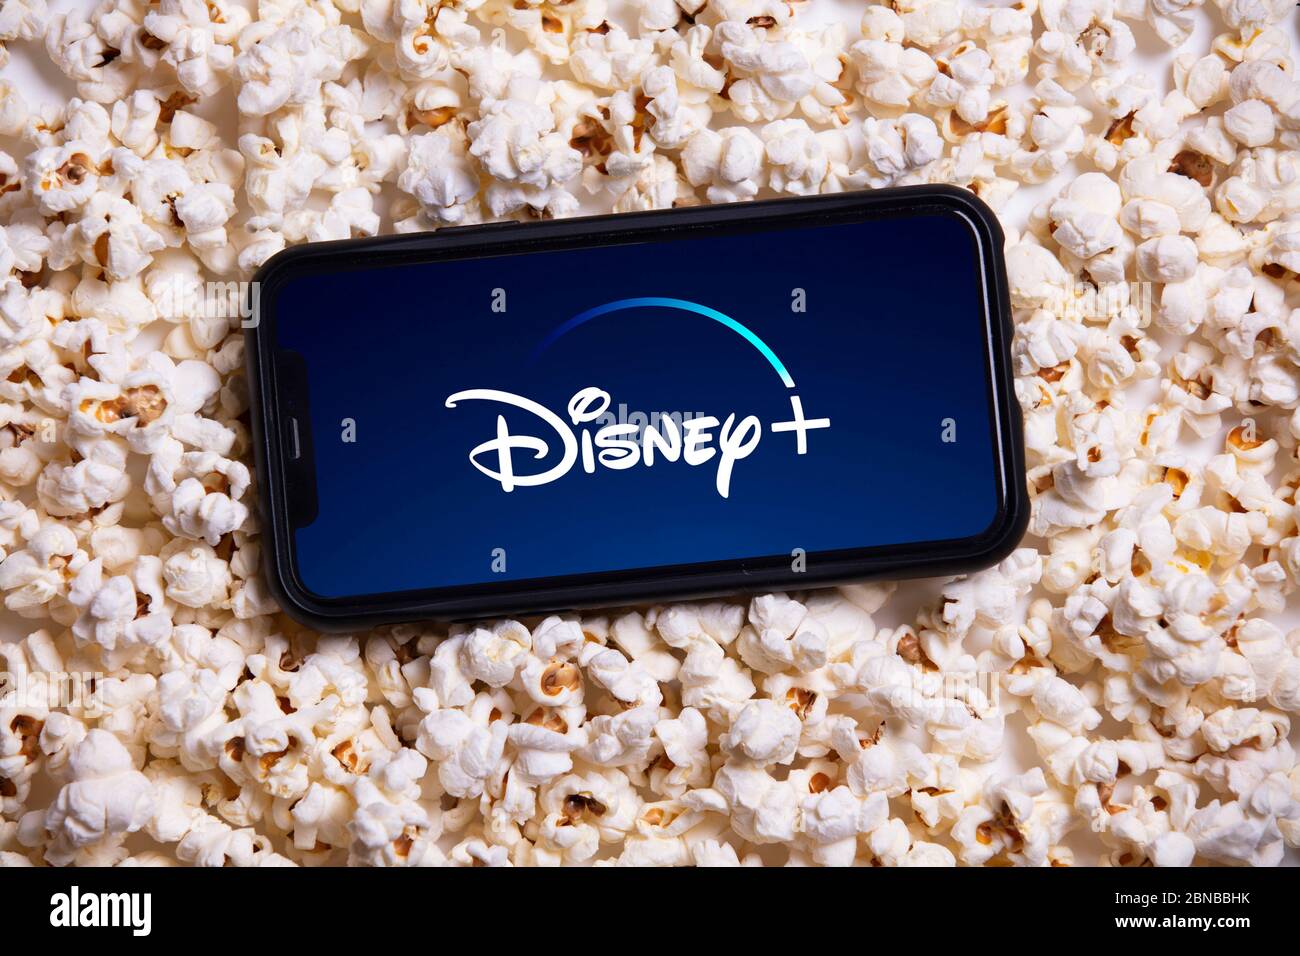 LONDON, UK - MAY 14 2020: Disney plus logo on a smartphone with popcorn Stock Photo